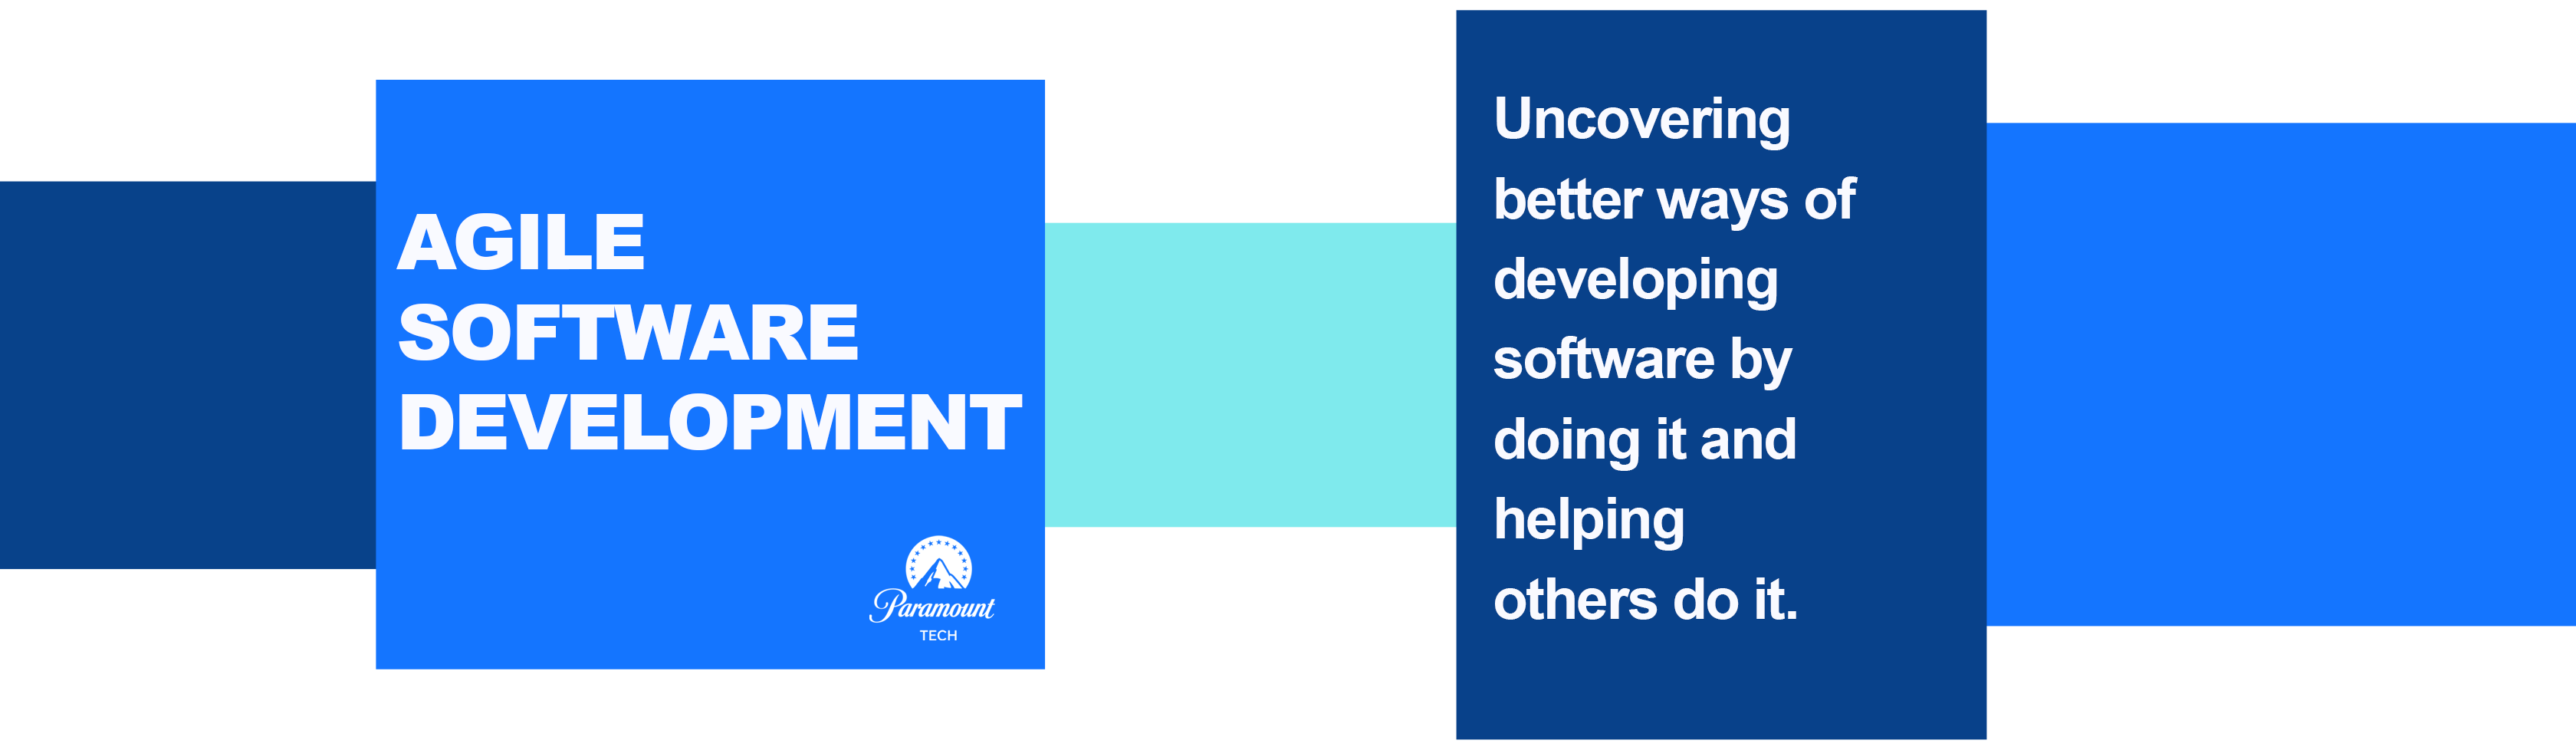 Agile Software development